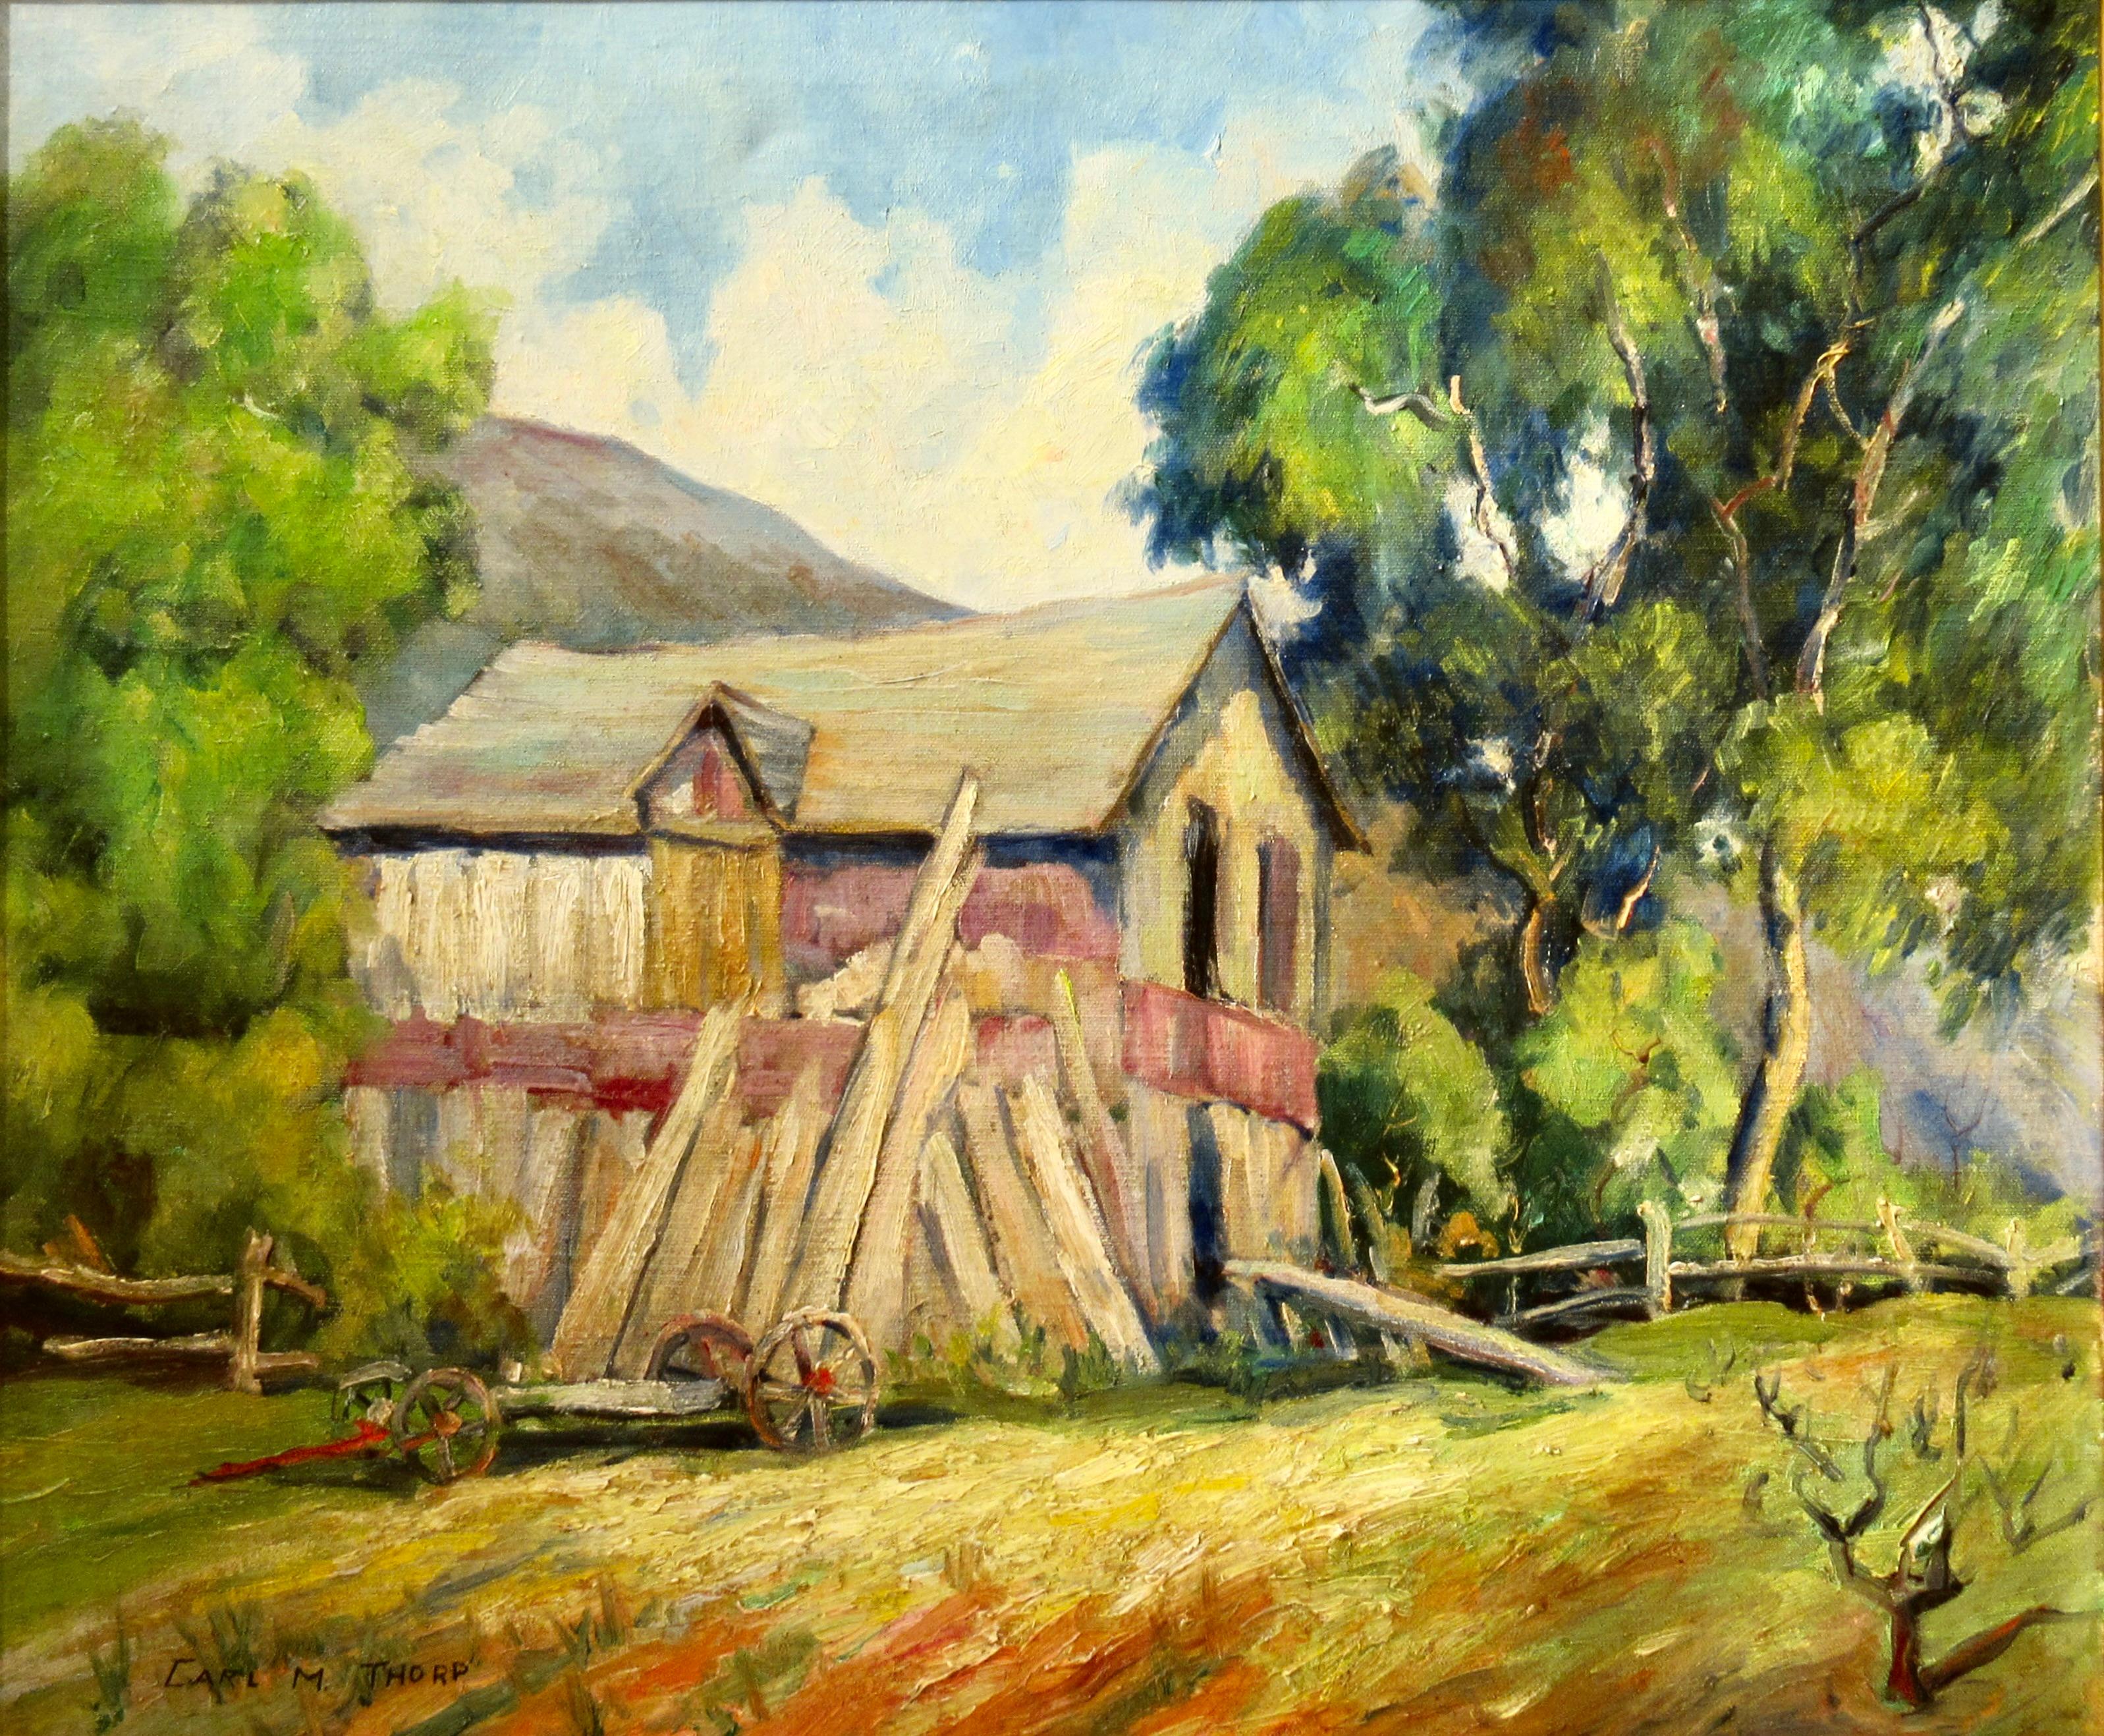 The Lumberjack House, Santa Cruz, Califoenia - Painting by Carl Thorp